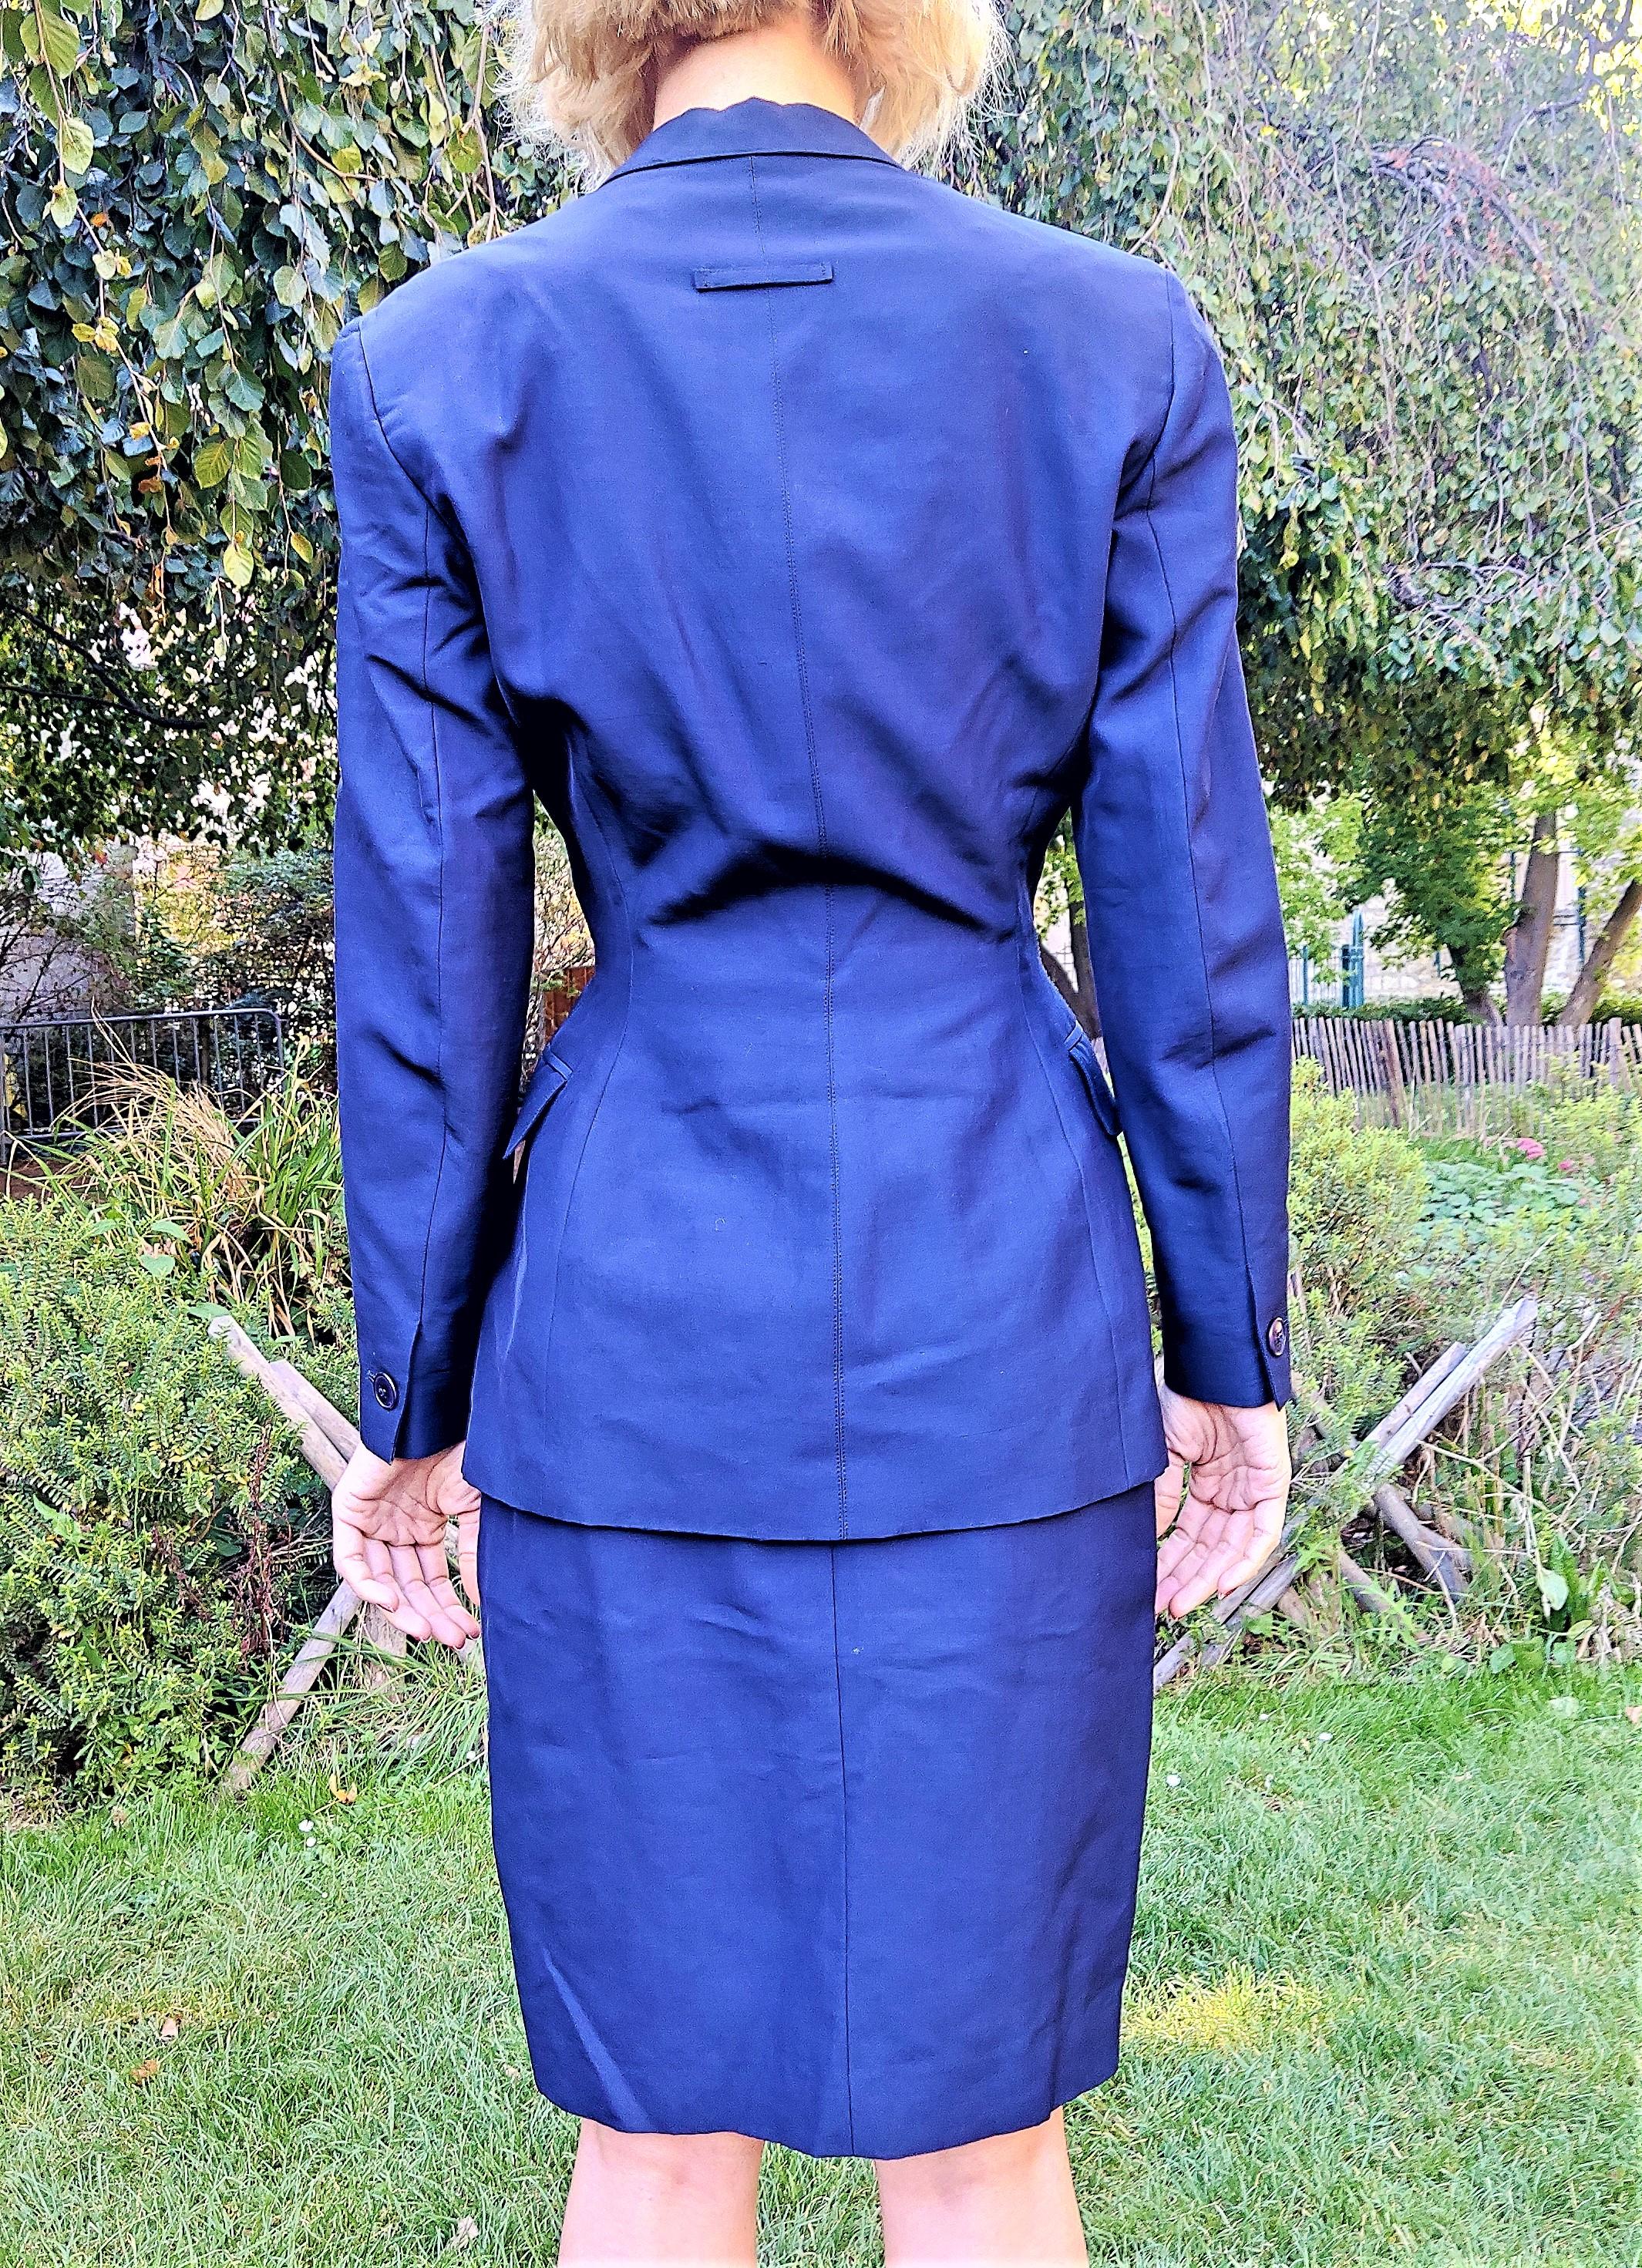 Jean Paul Gaultier Classique Blue Navy Orange Blazer Formal Blazer Skirt Suit For Sale 6